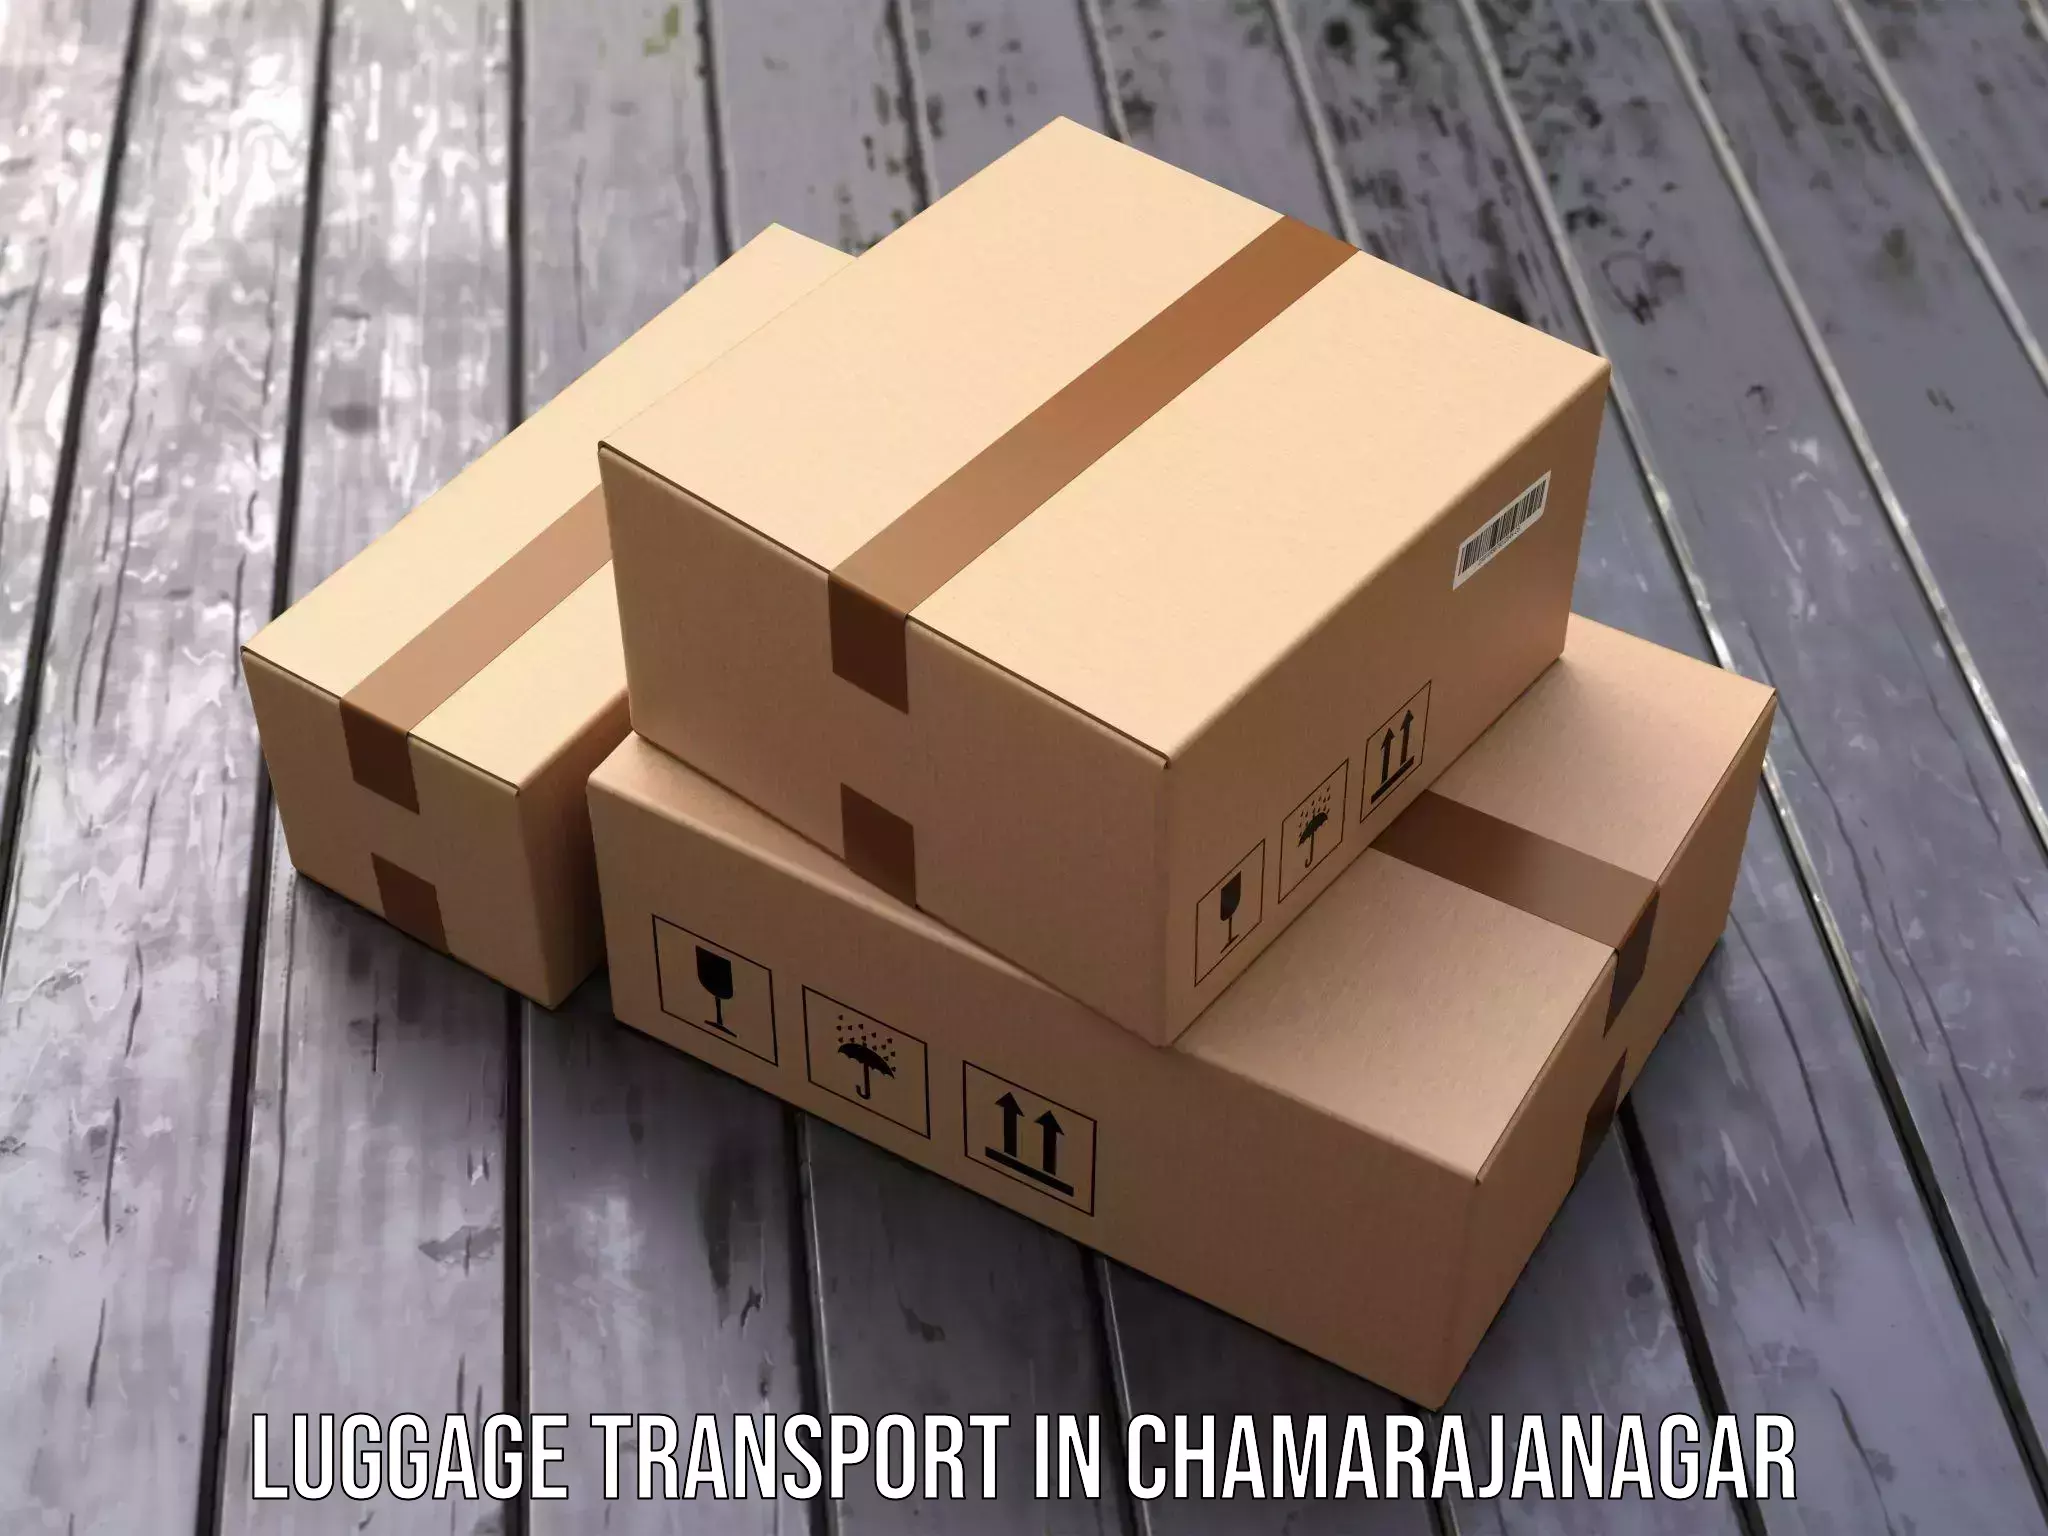 Holiday season luggage delivery in Chamarajanagar